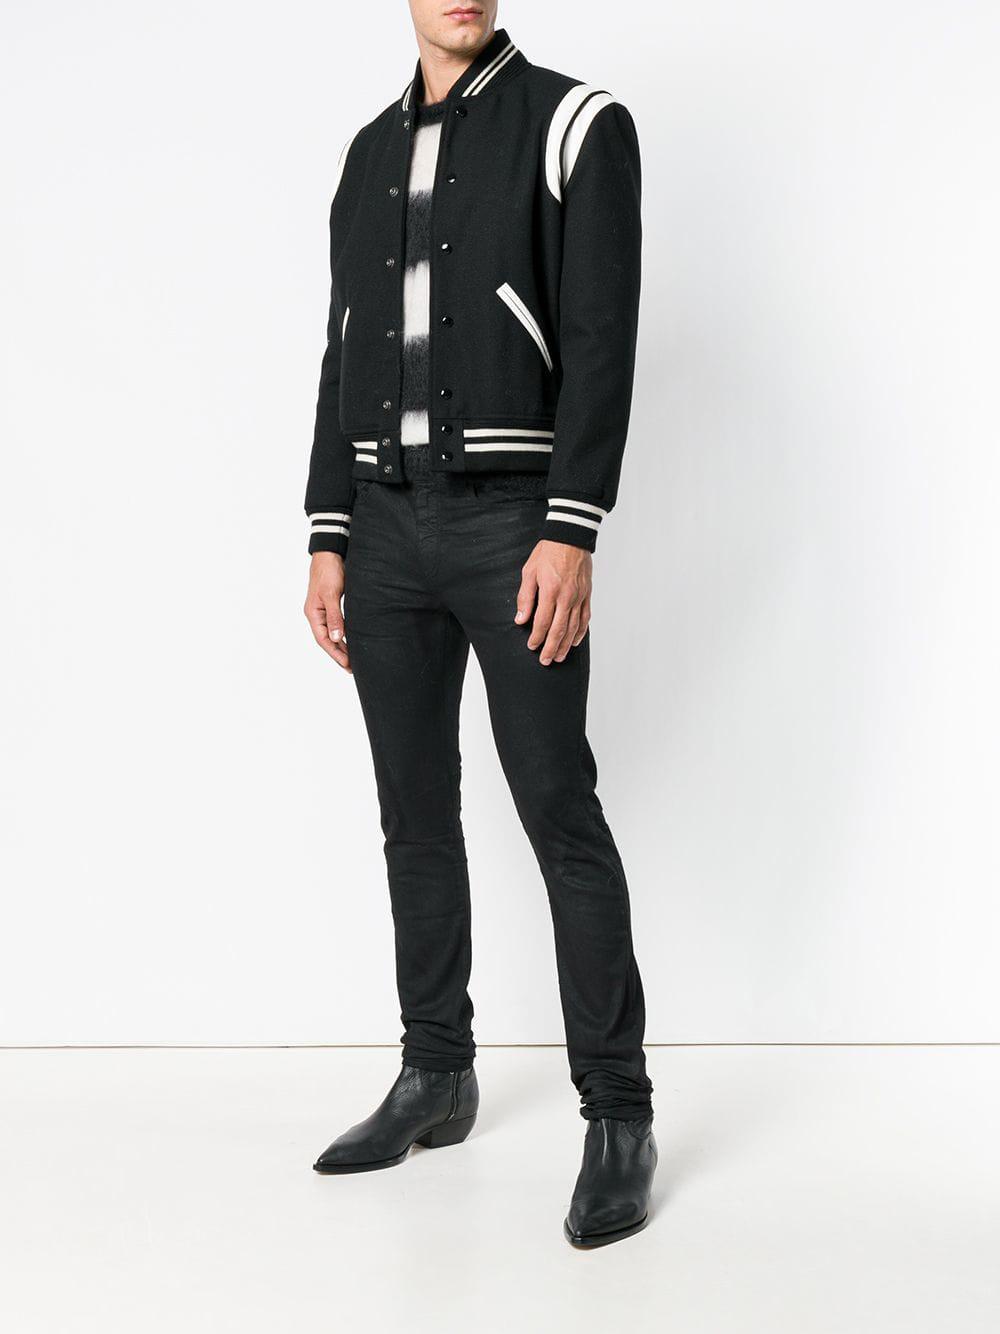 Saint Laurent Wool Classic Teddy Jacket in Black for Men - Lyst